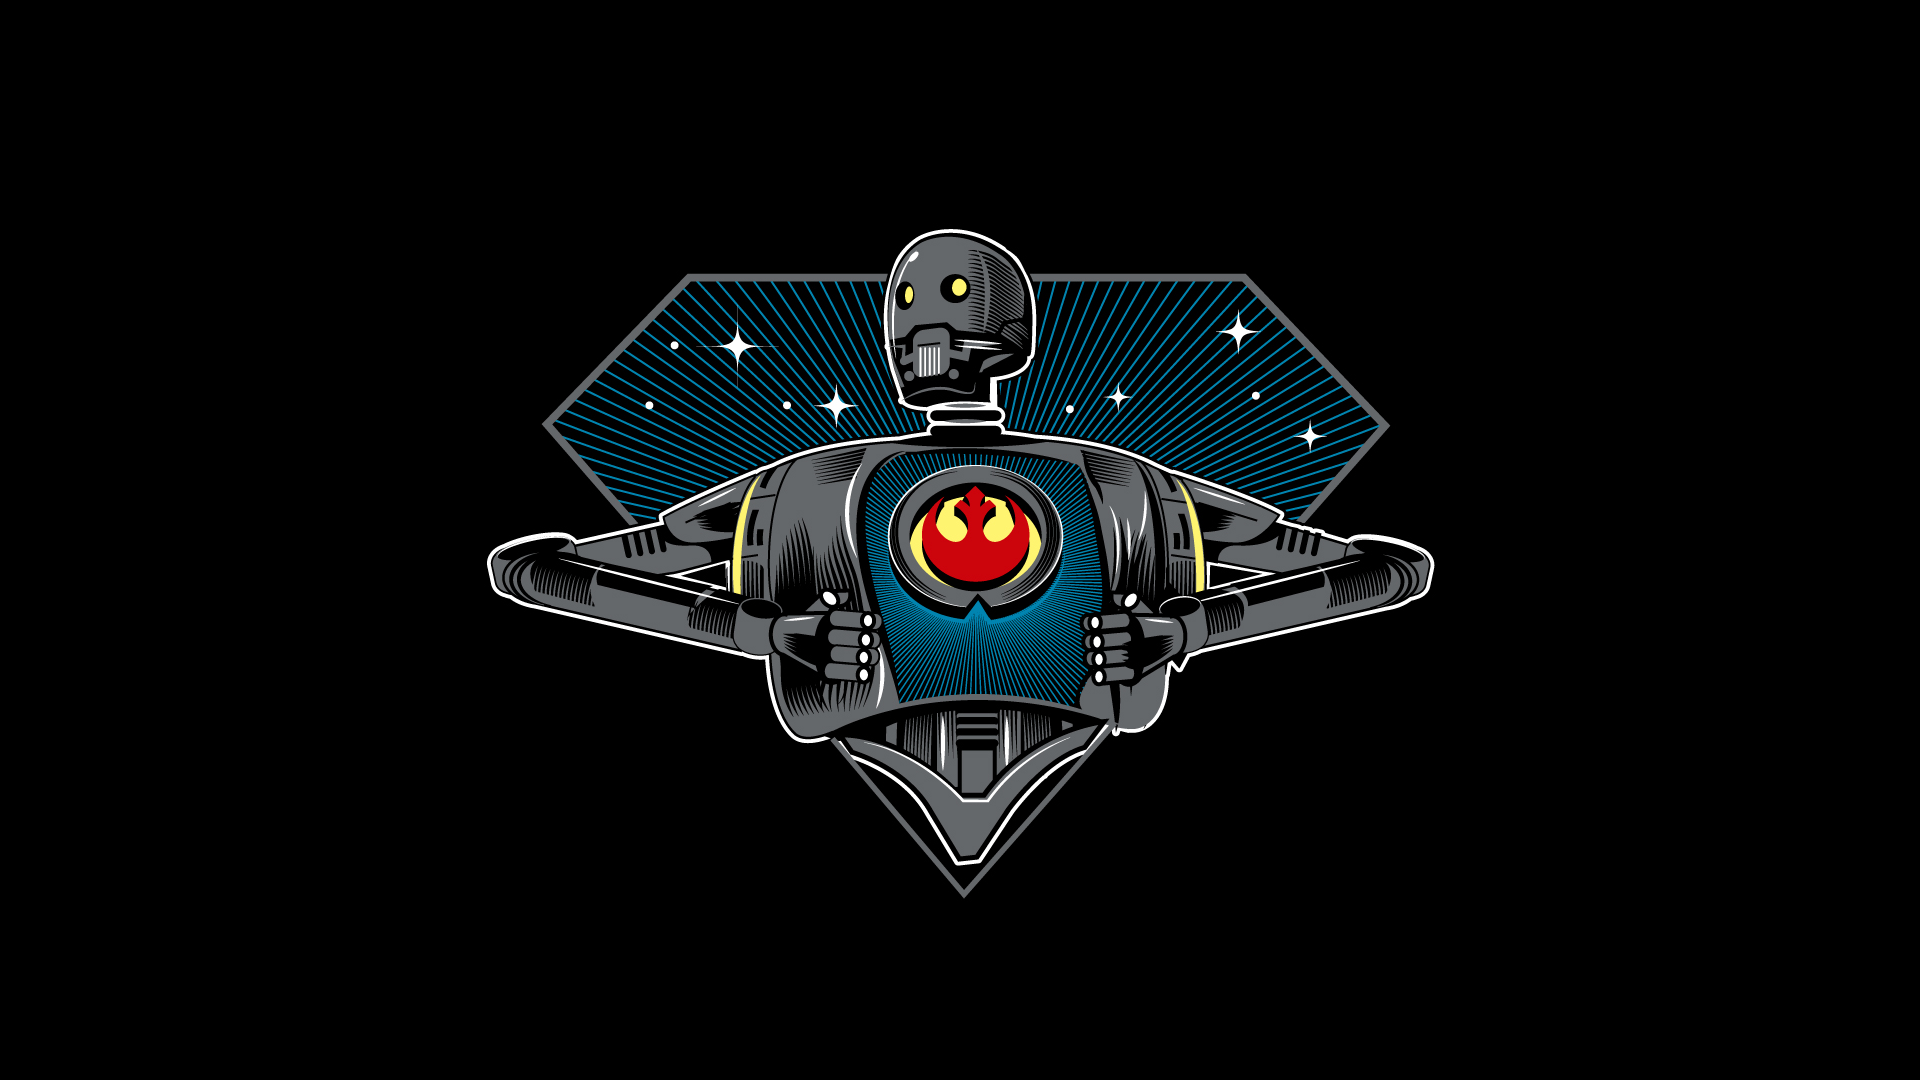 K 2SO Star Wars Robot Rebel Alliance Star Wars Droids Yellow Eyes Simple Background Black Background 1920x1080